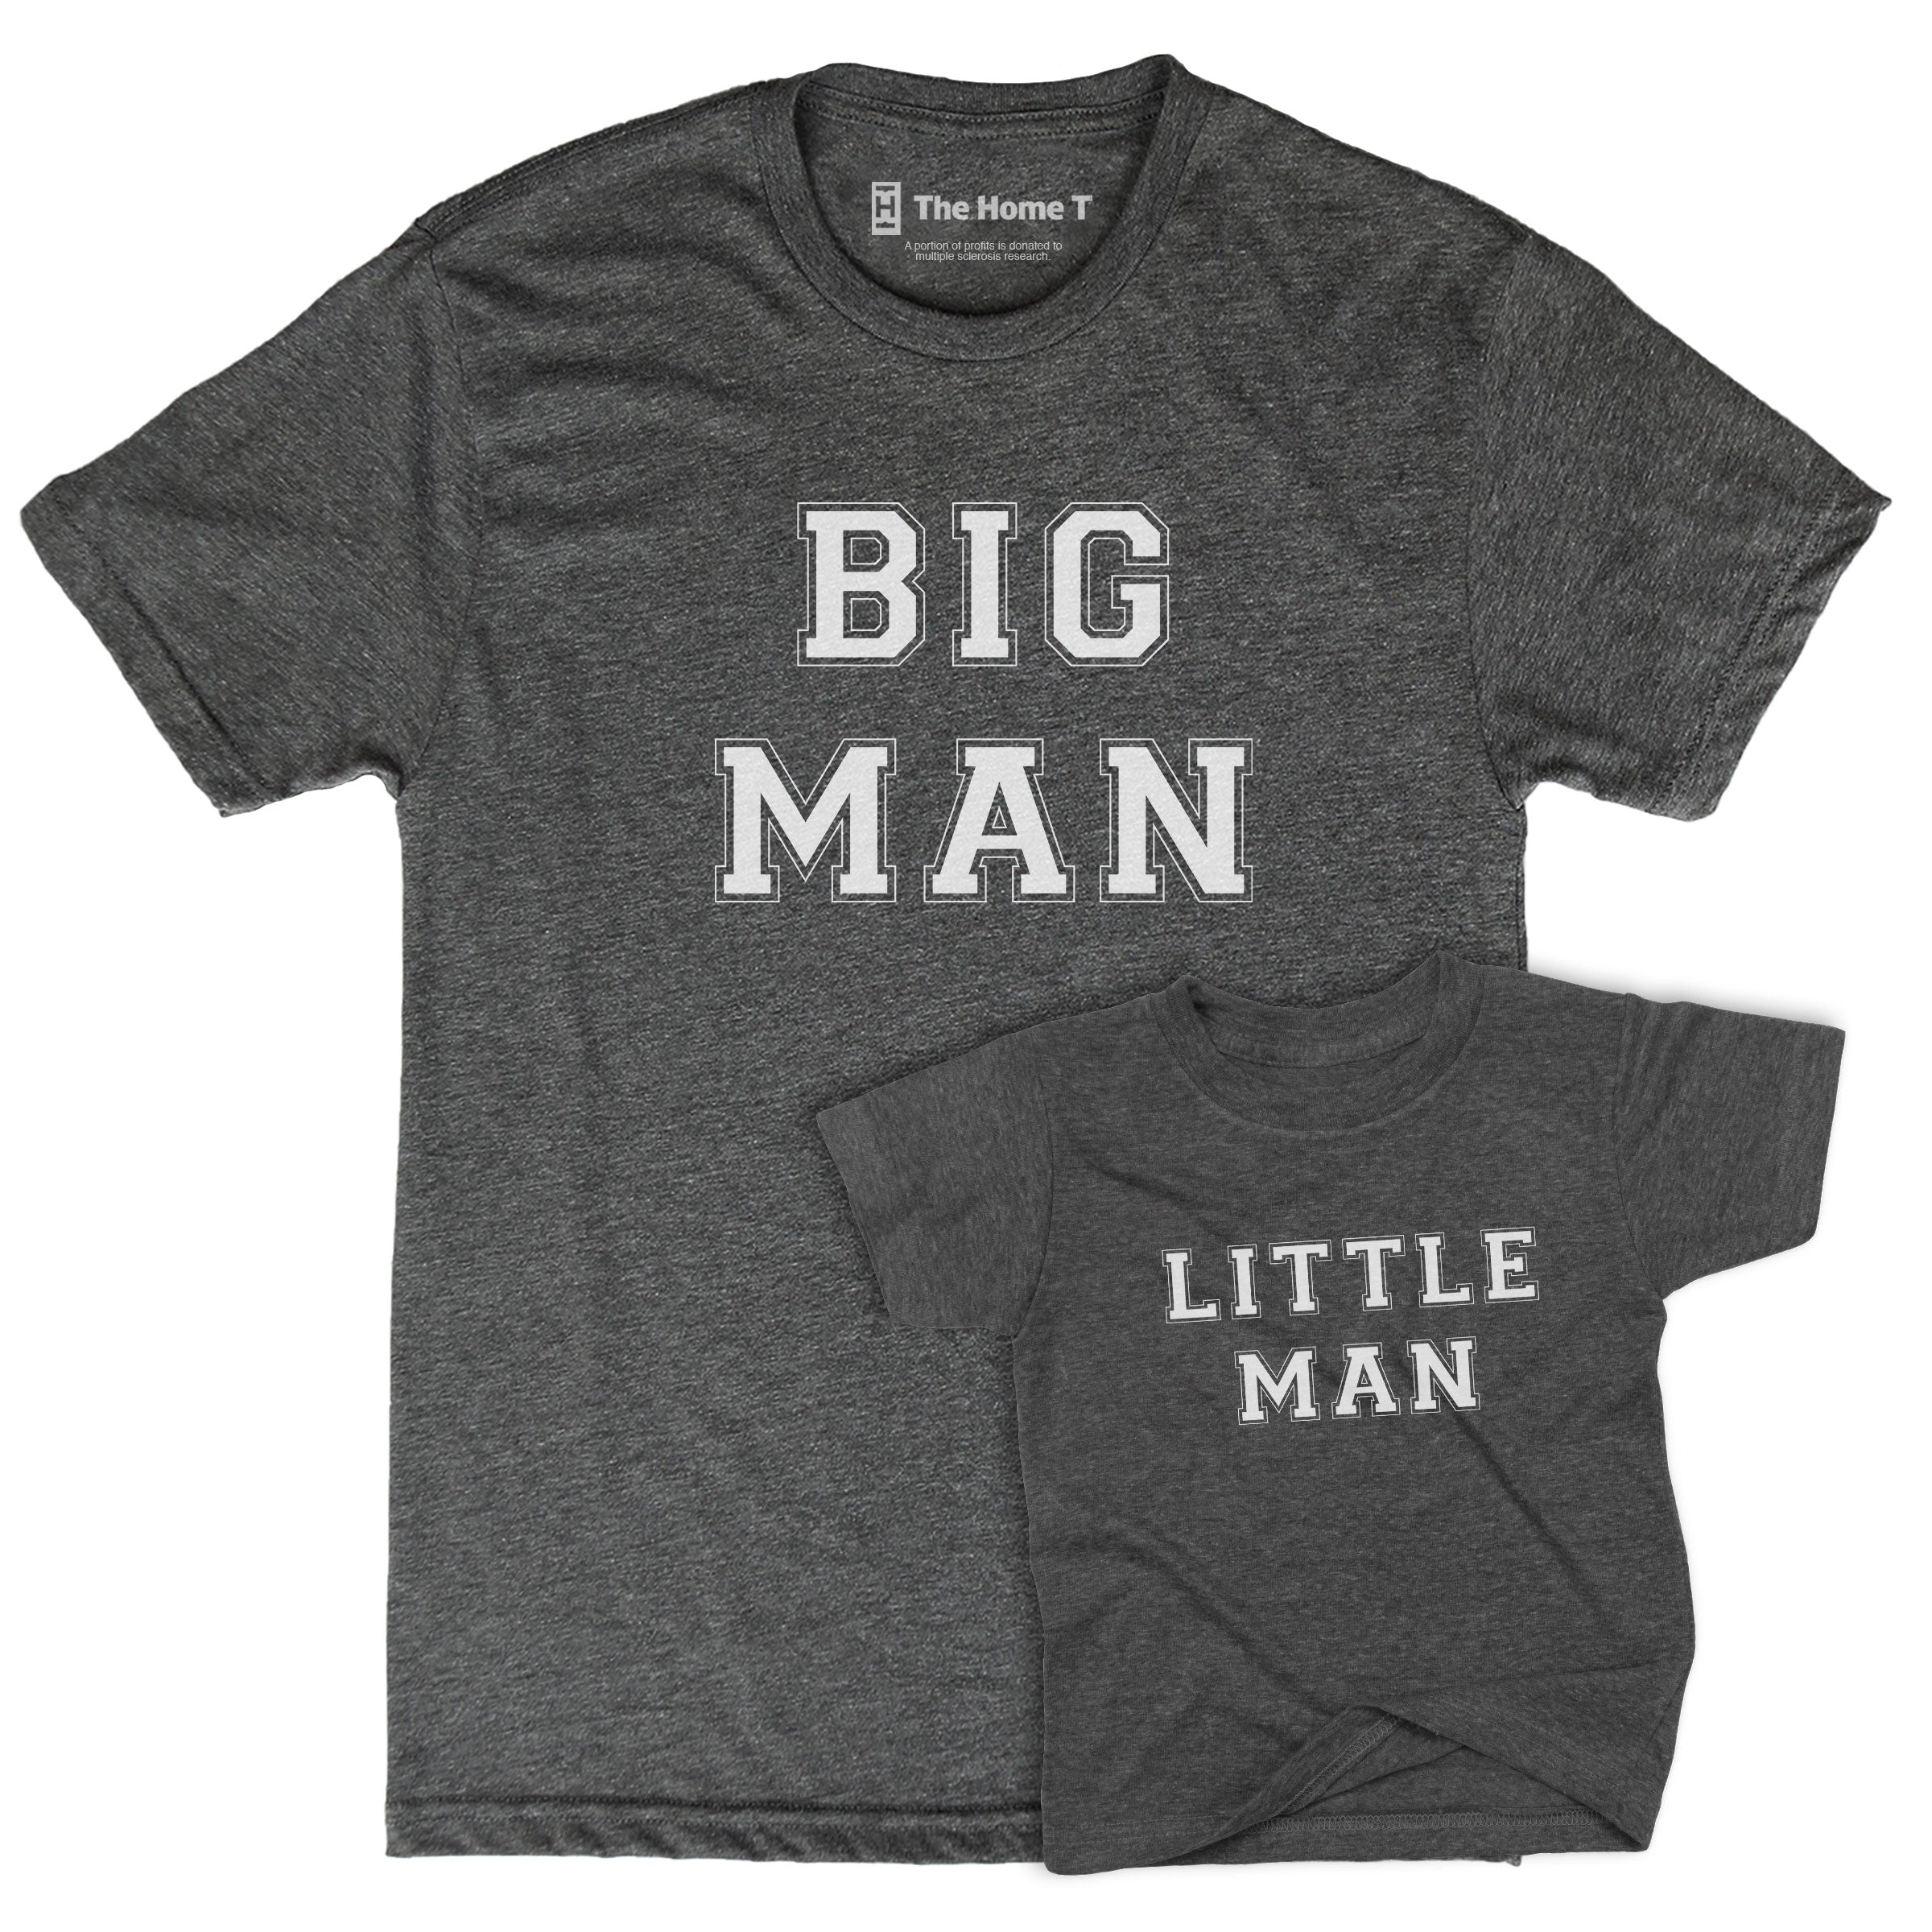 Big Man Little Man (Matching Set)